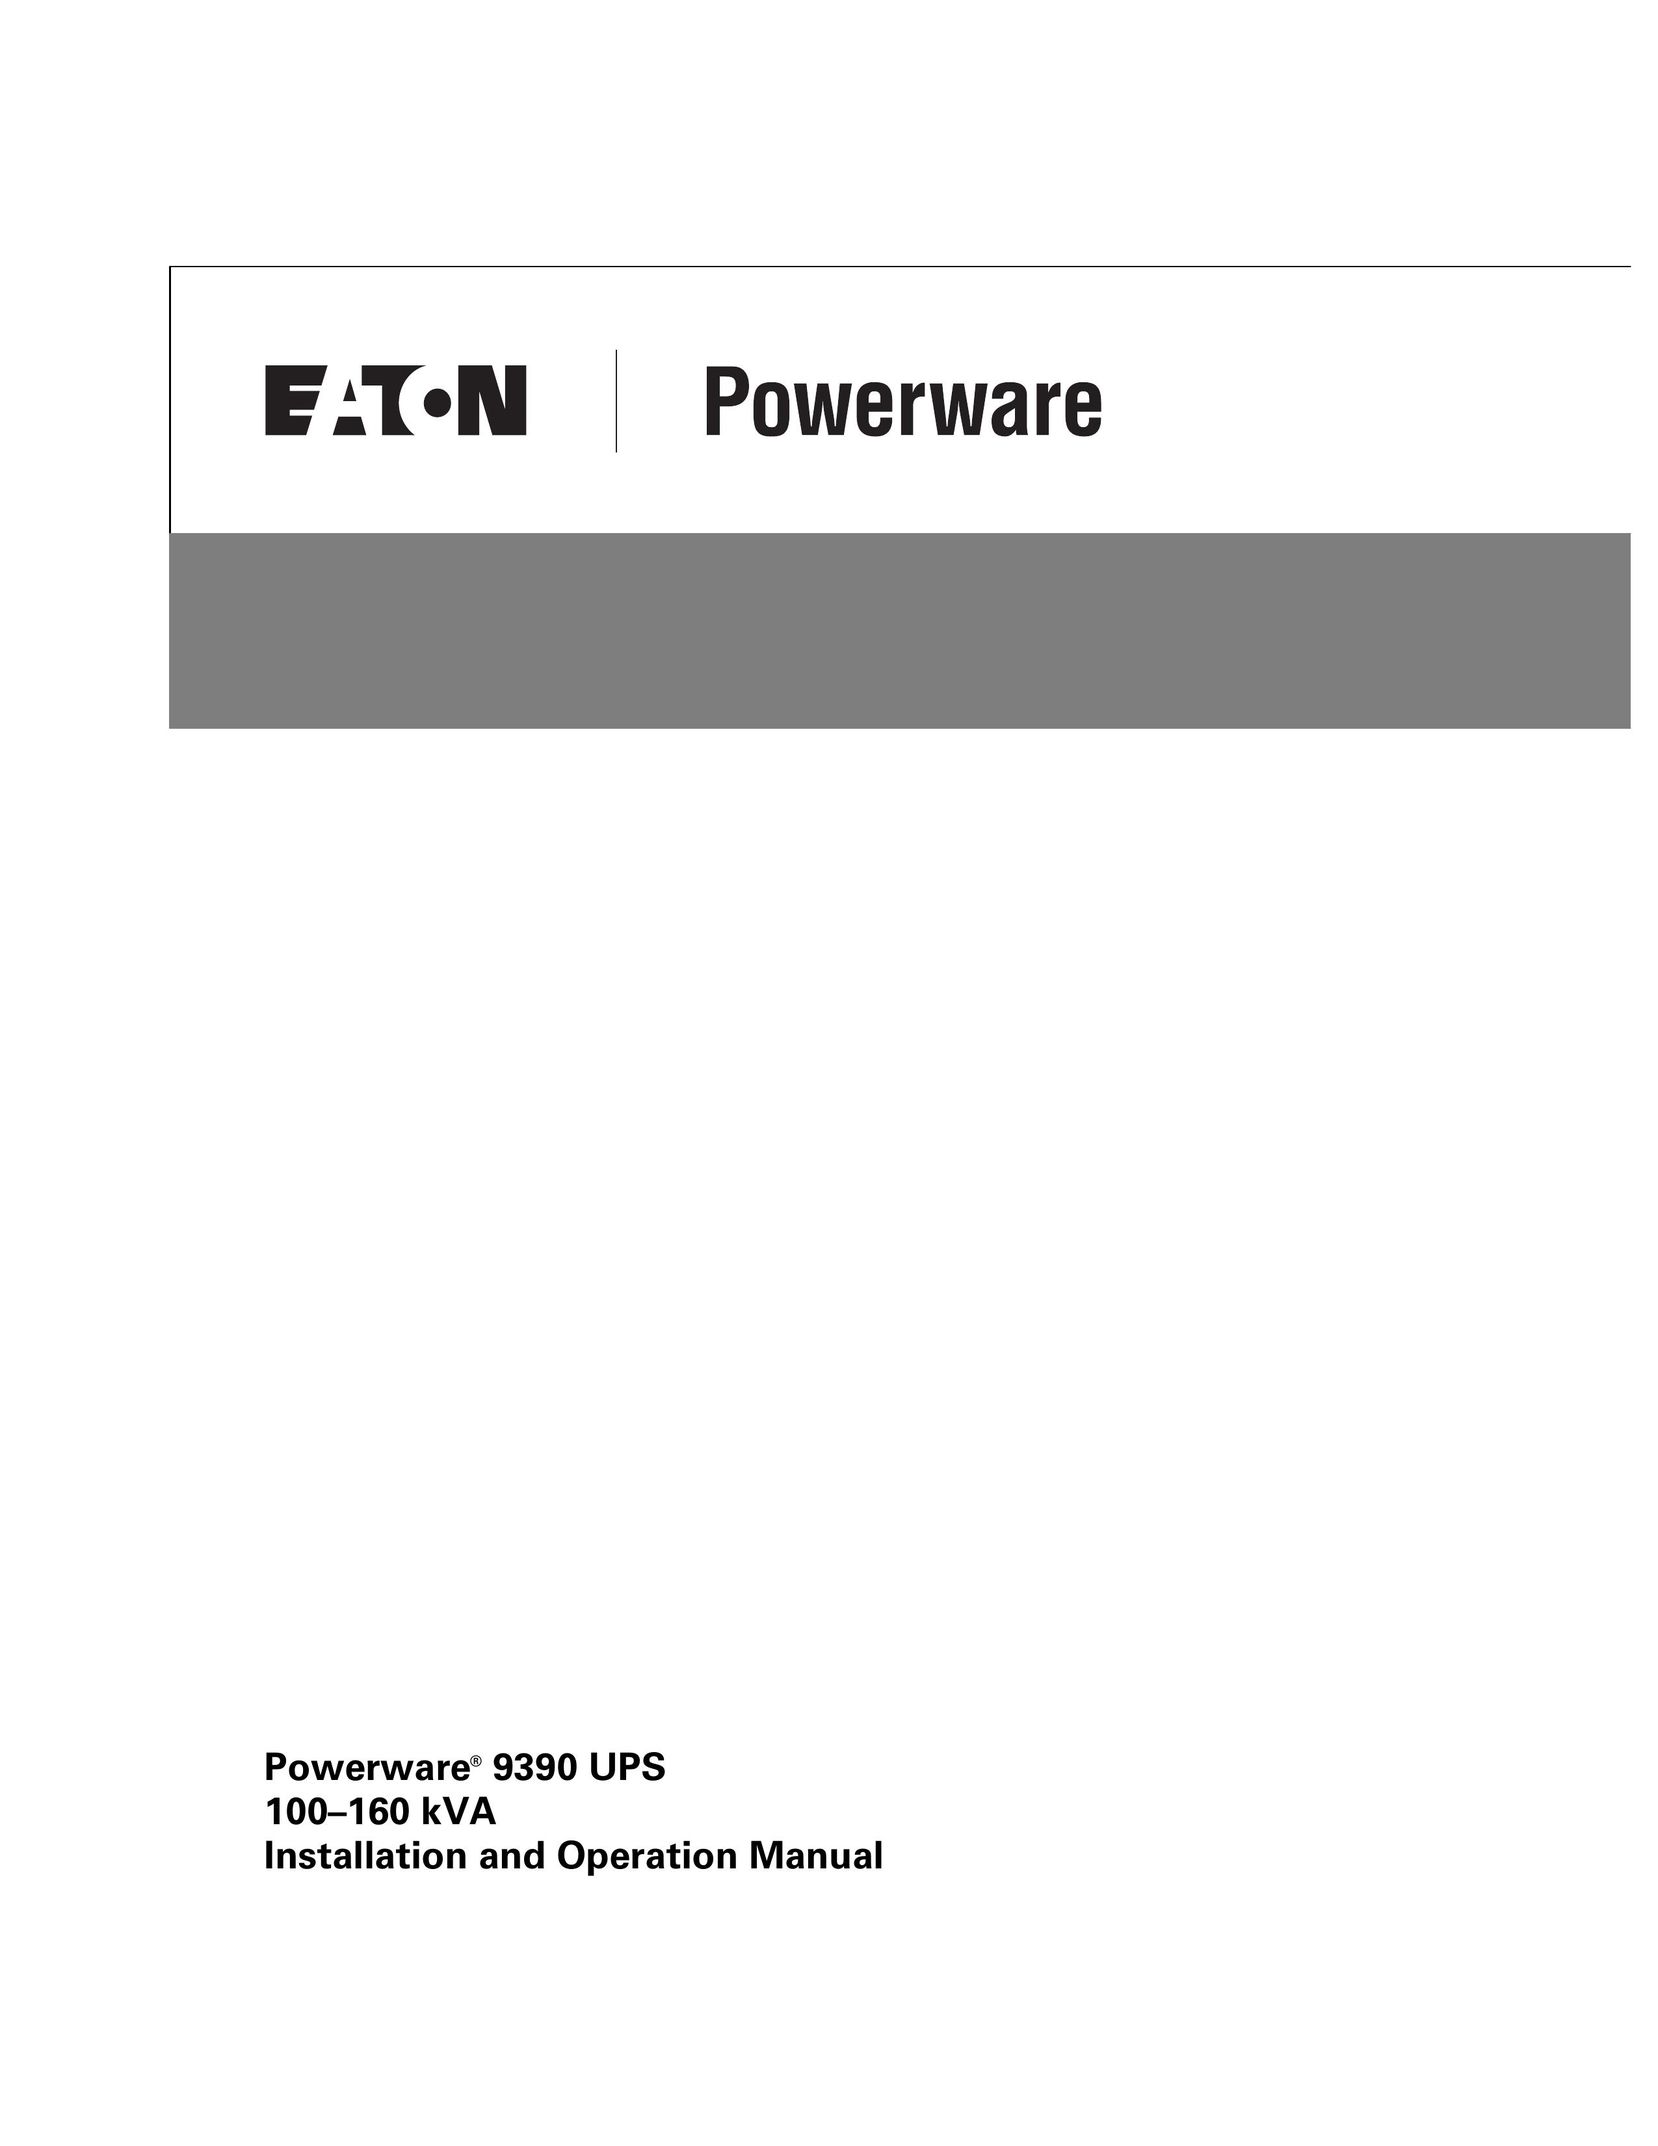 Powerware 100160 kVA Power Supply User Manual